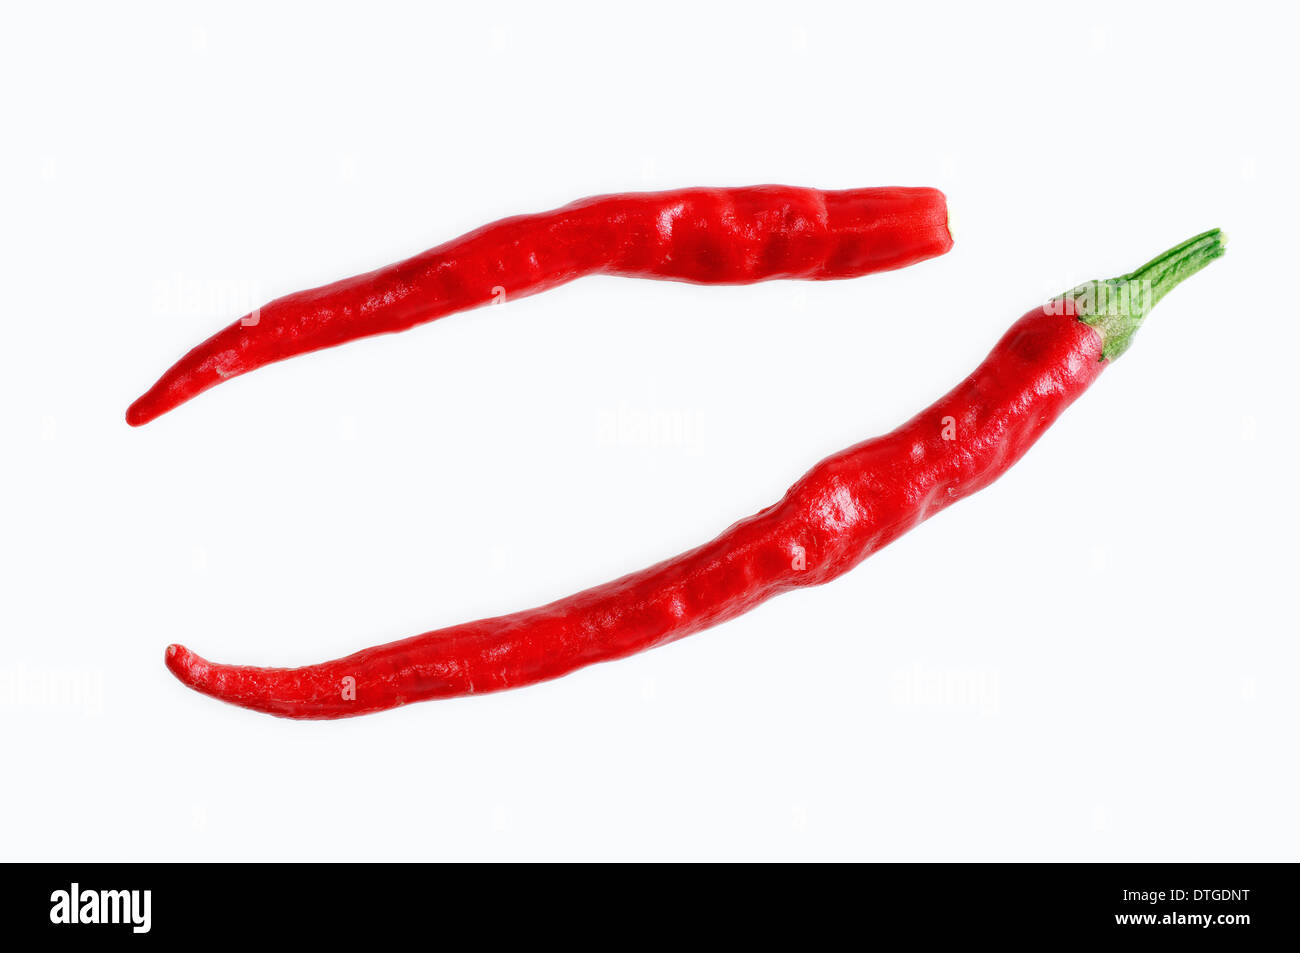 Hot Chili, Chili, Cayenne, Chili Pepper or Tabasco Pepper (Capsicum frutescens) Stock Photo